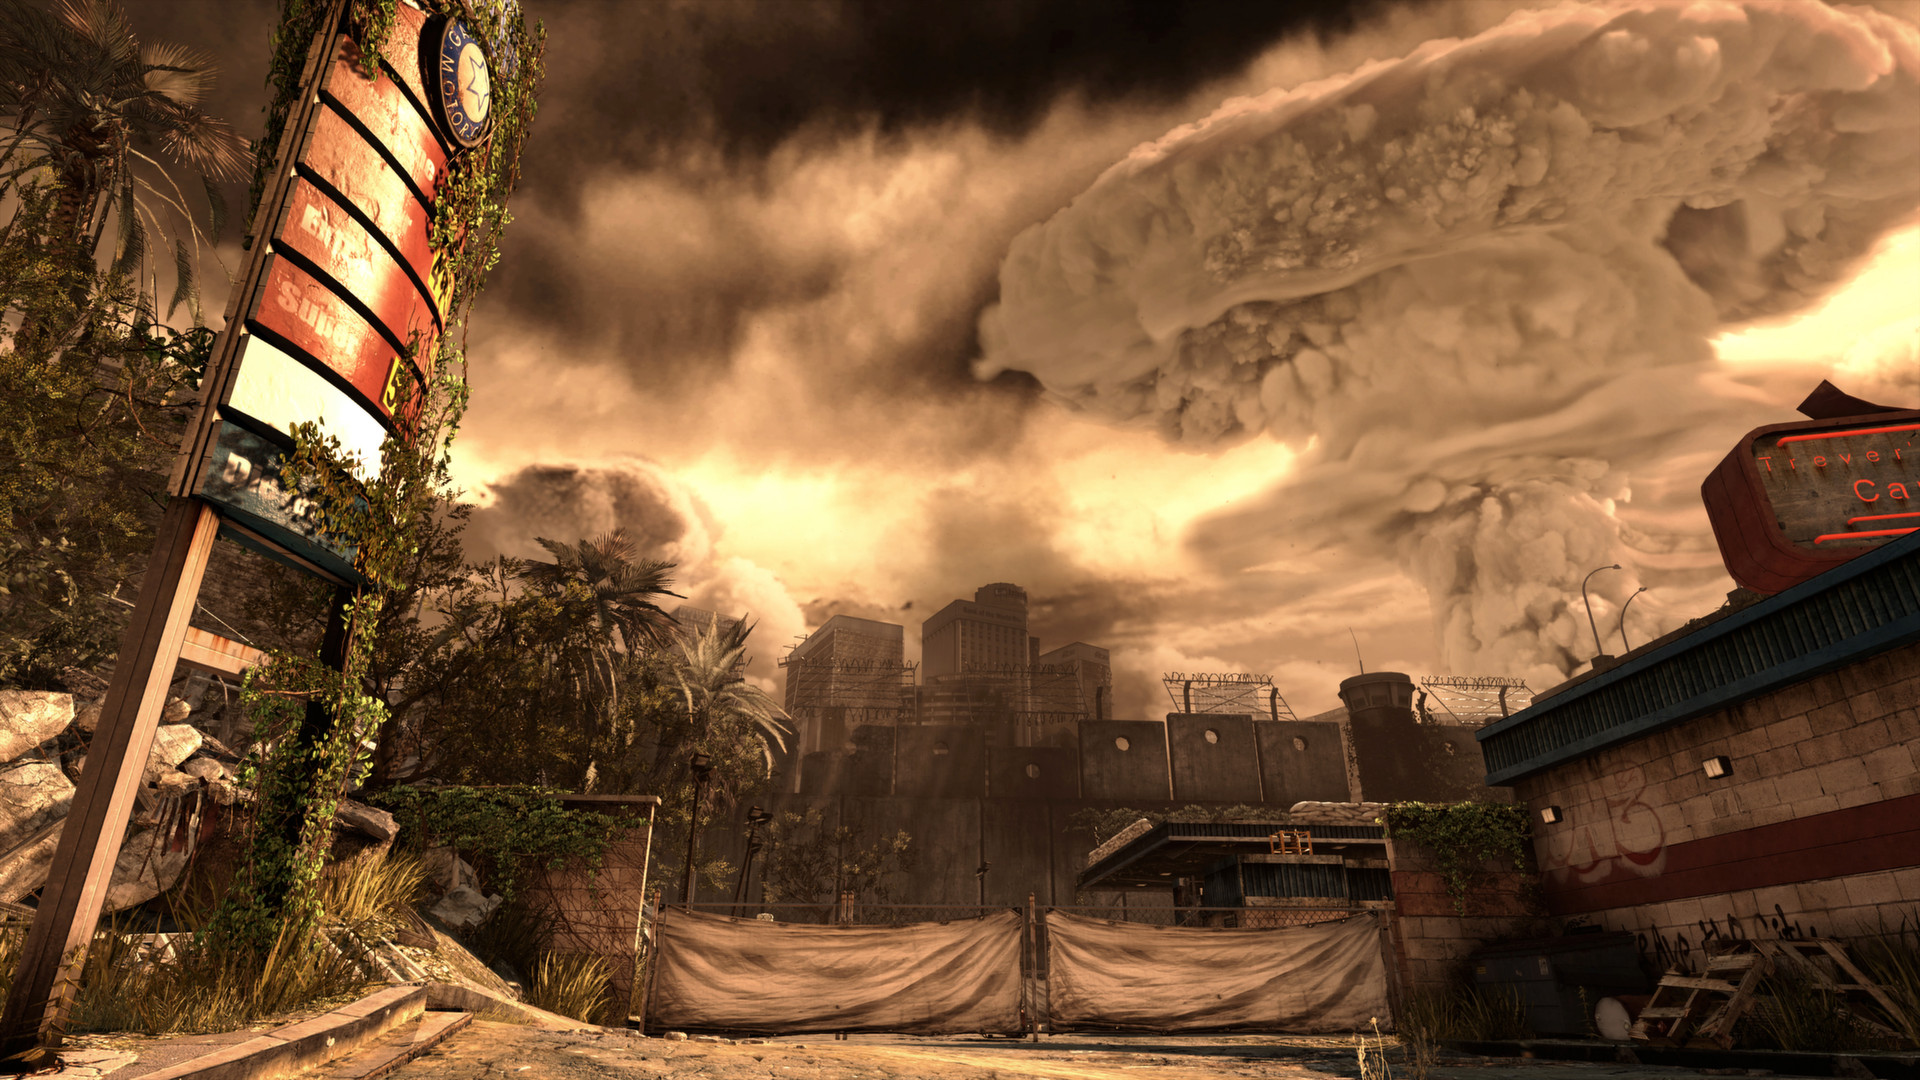 Call of Duty: Ghosts - Nemesis - Metacritic